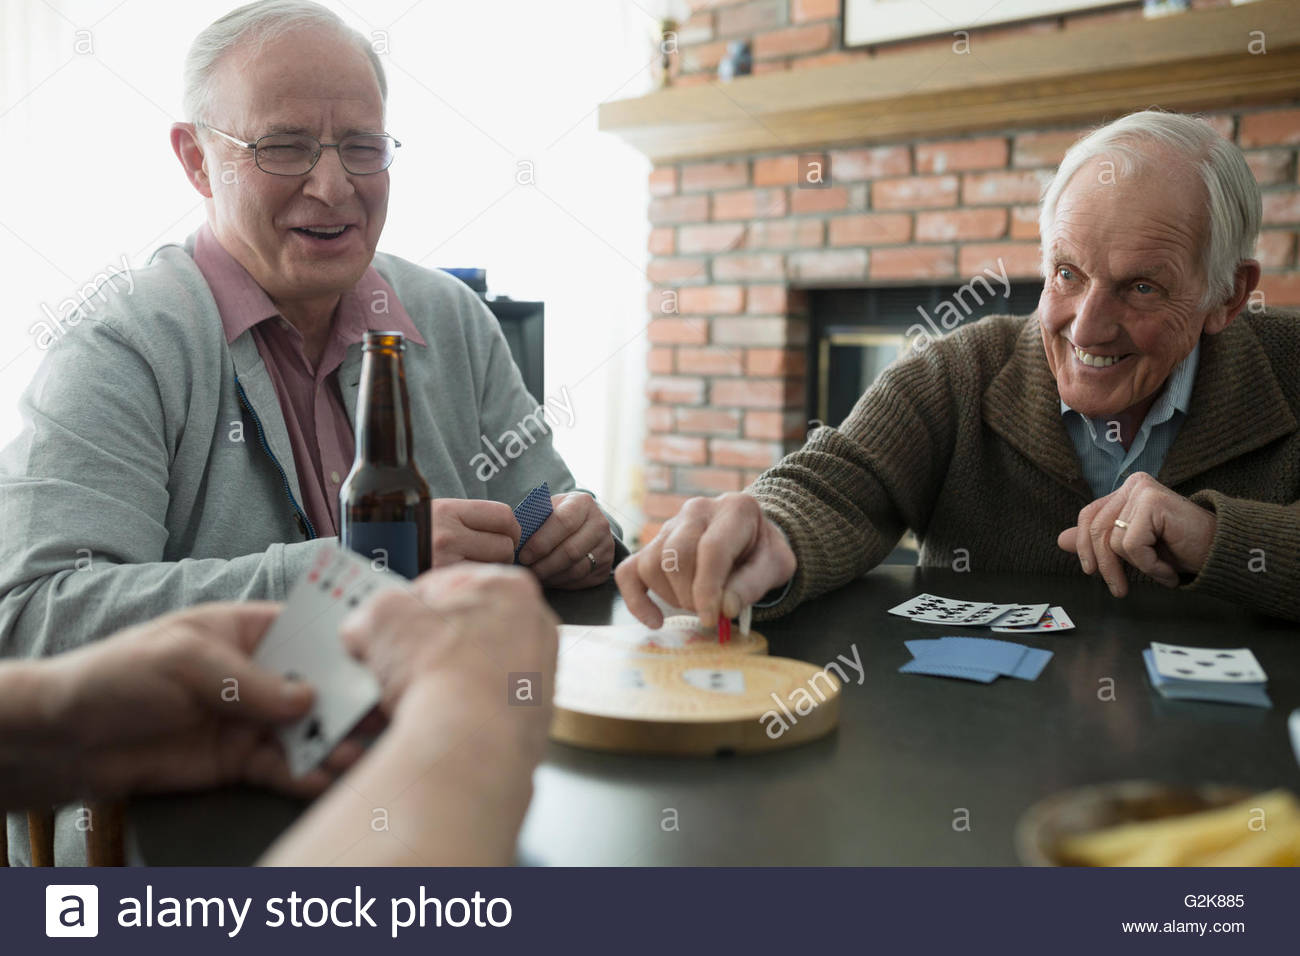 Senior men playing cribbage and drinking beer Stock Photo